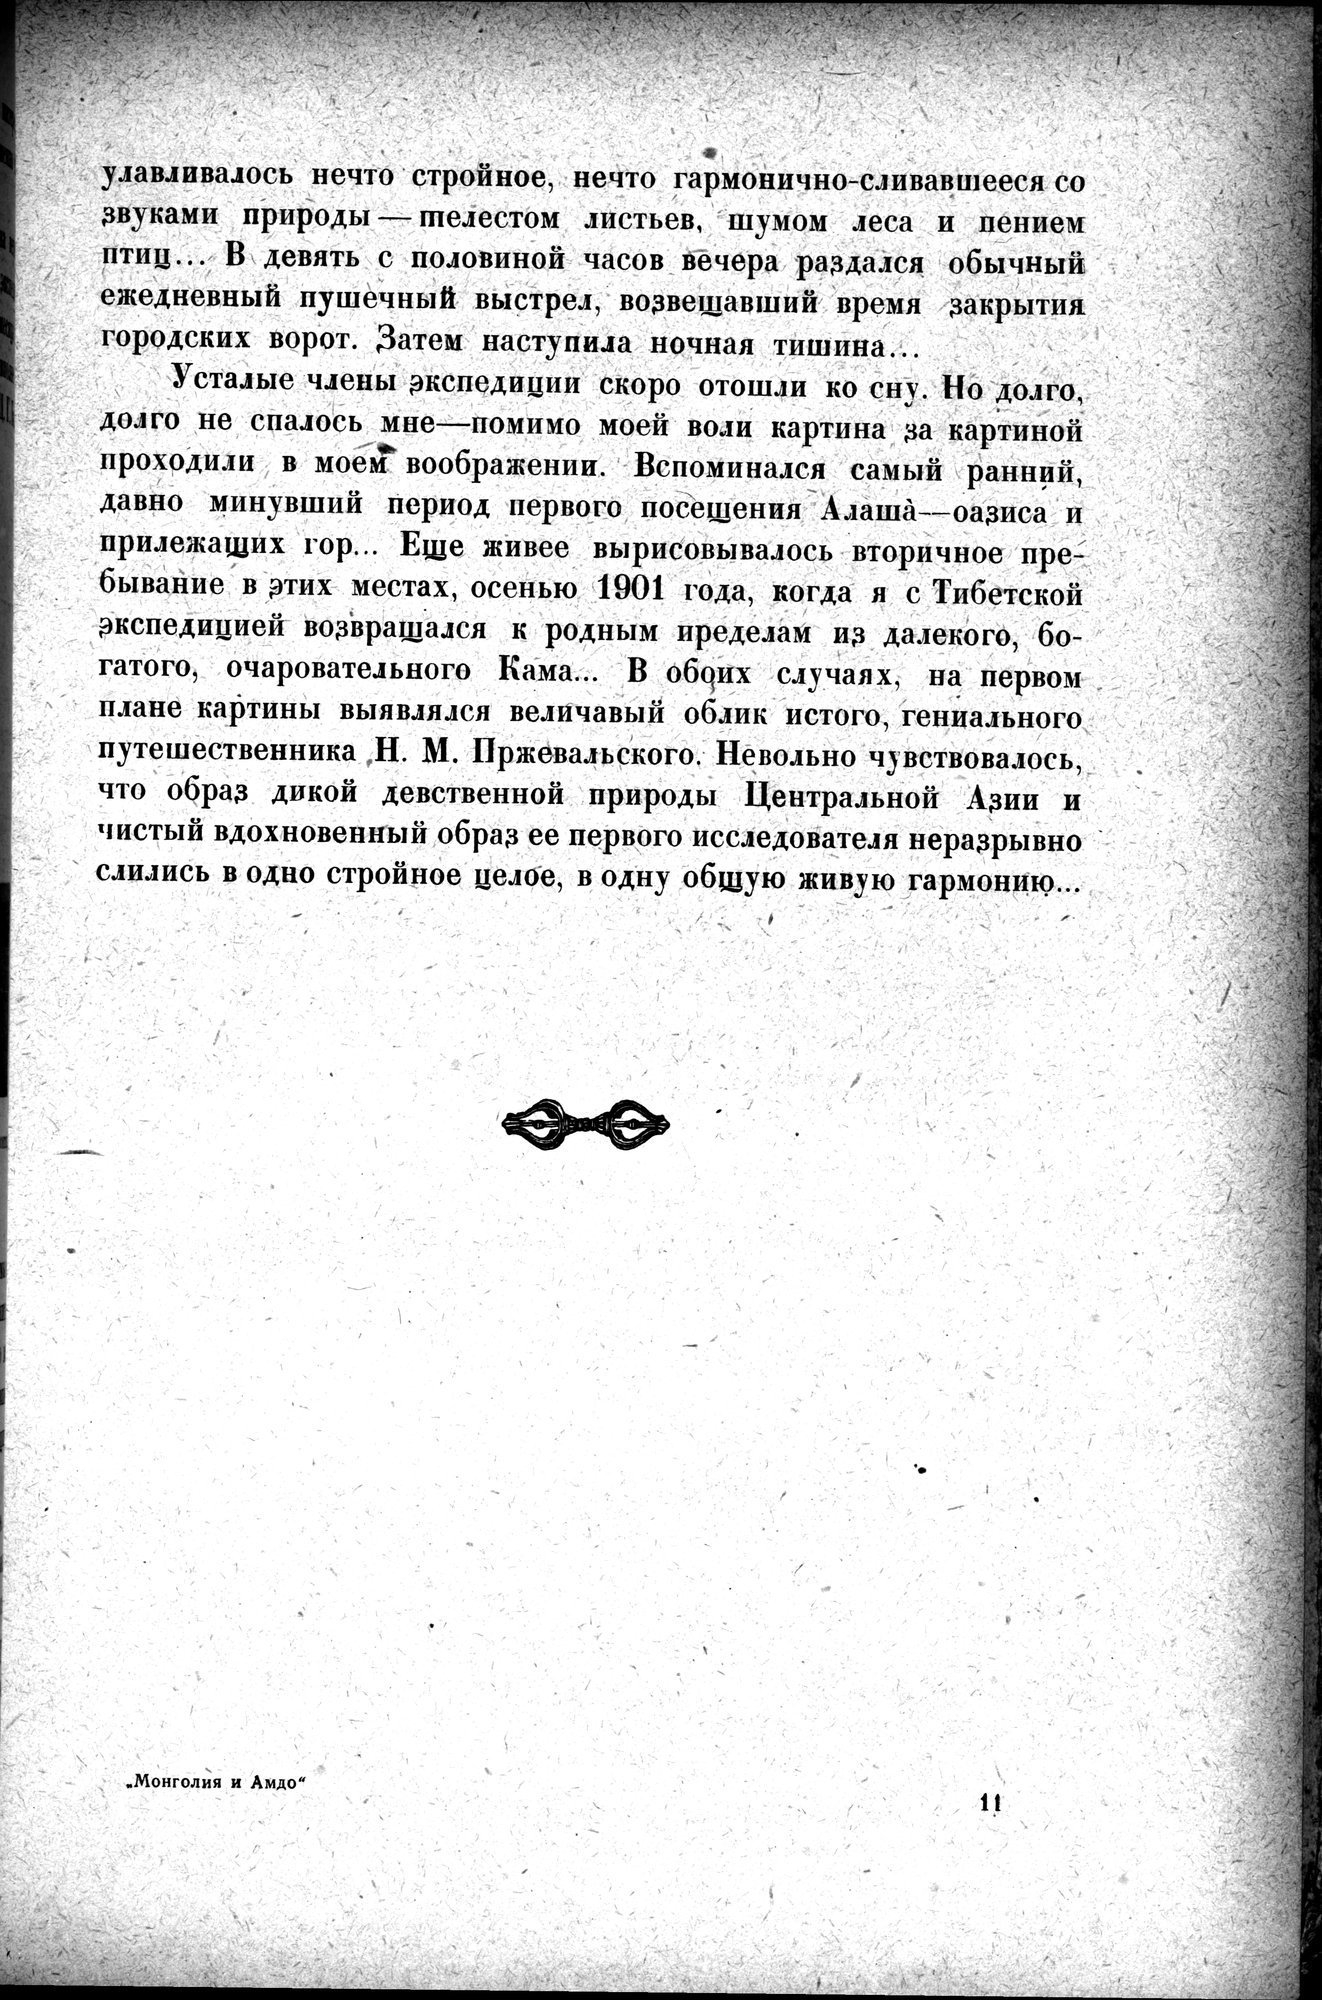 Mongoliya i Amdo i mertby gorod Khara-Khoto : vol.1 / Page 189 (Grayscale High Resolution Image)